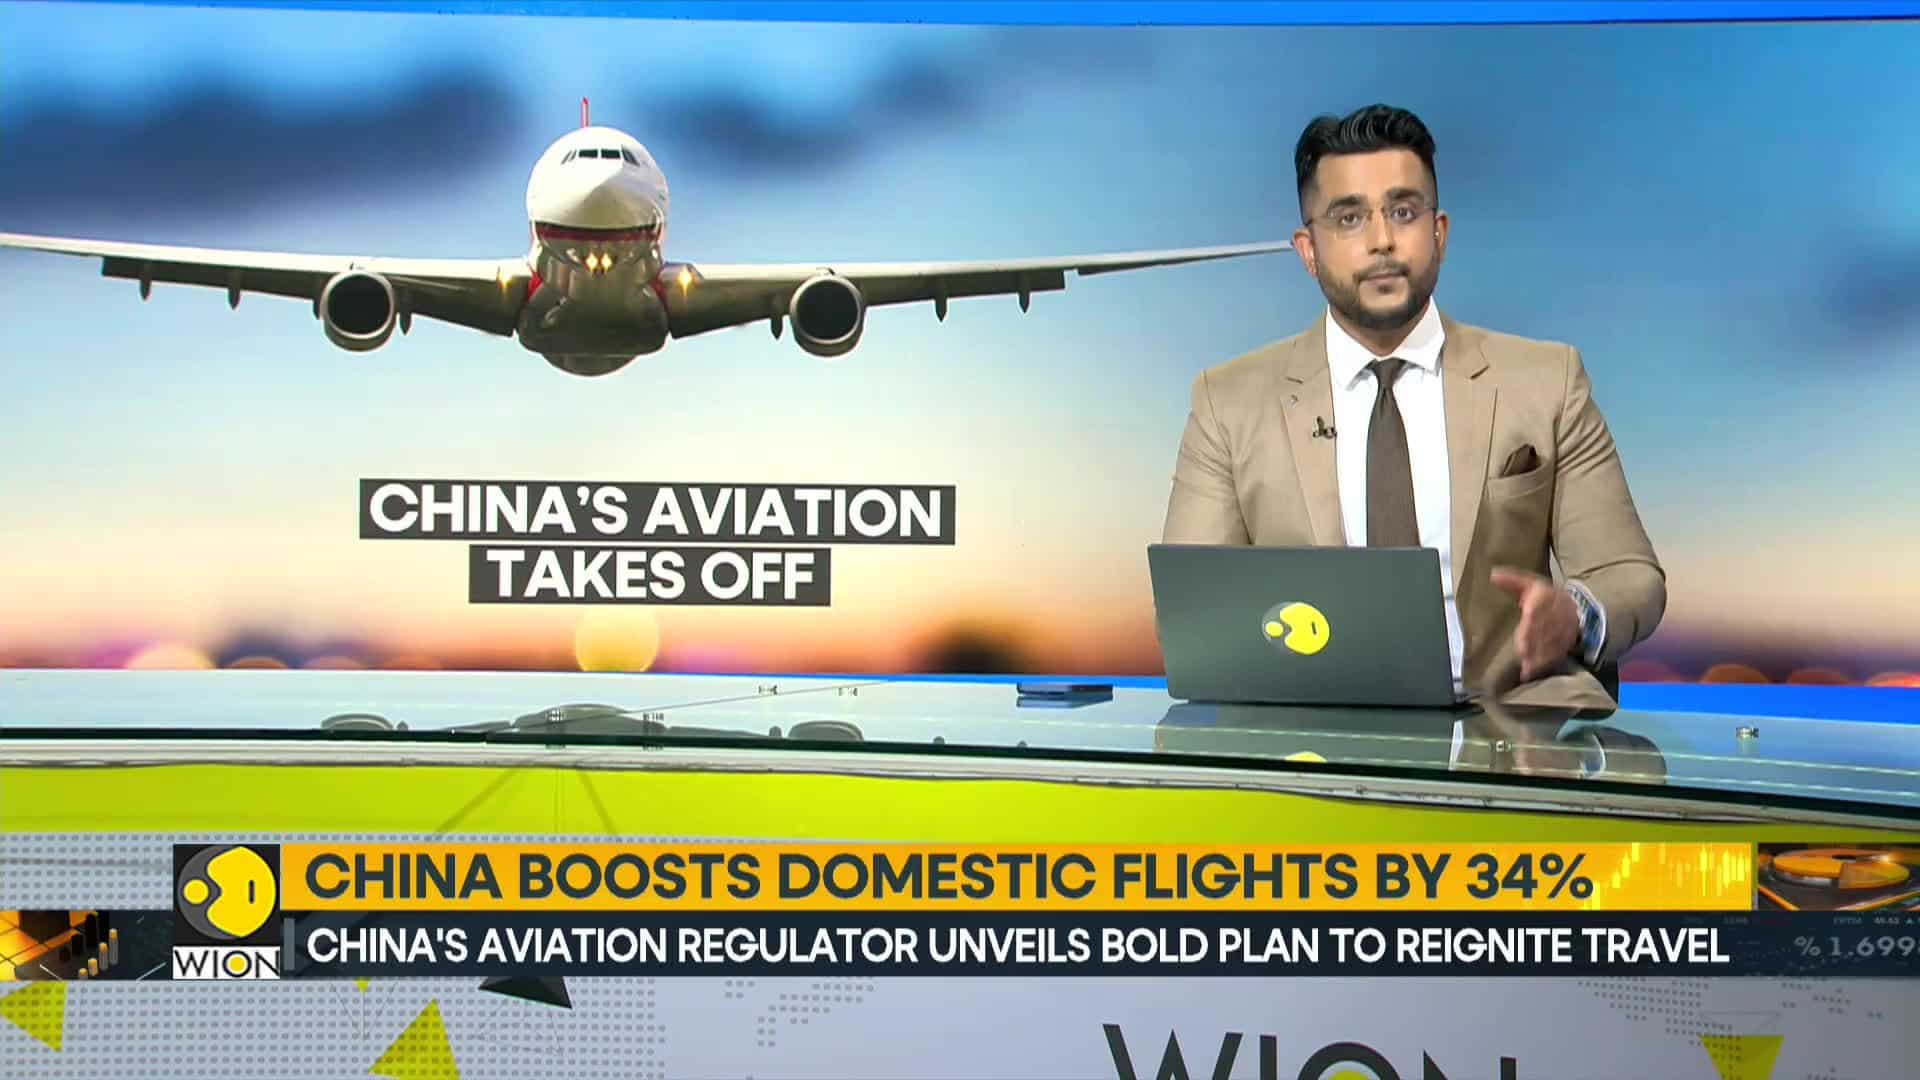 China's aviation regulator unveils bold plan to reignite travel